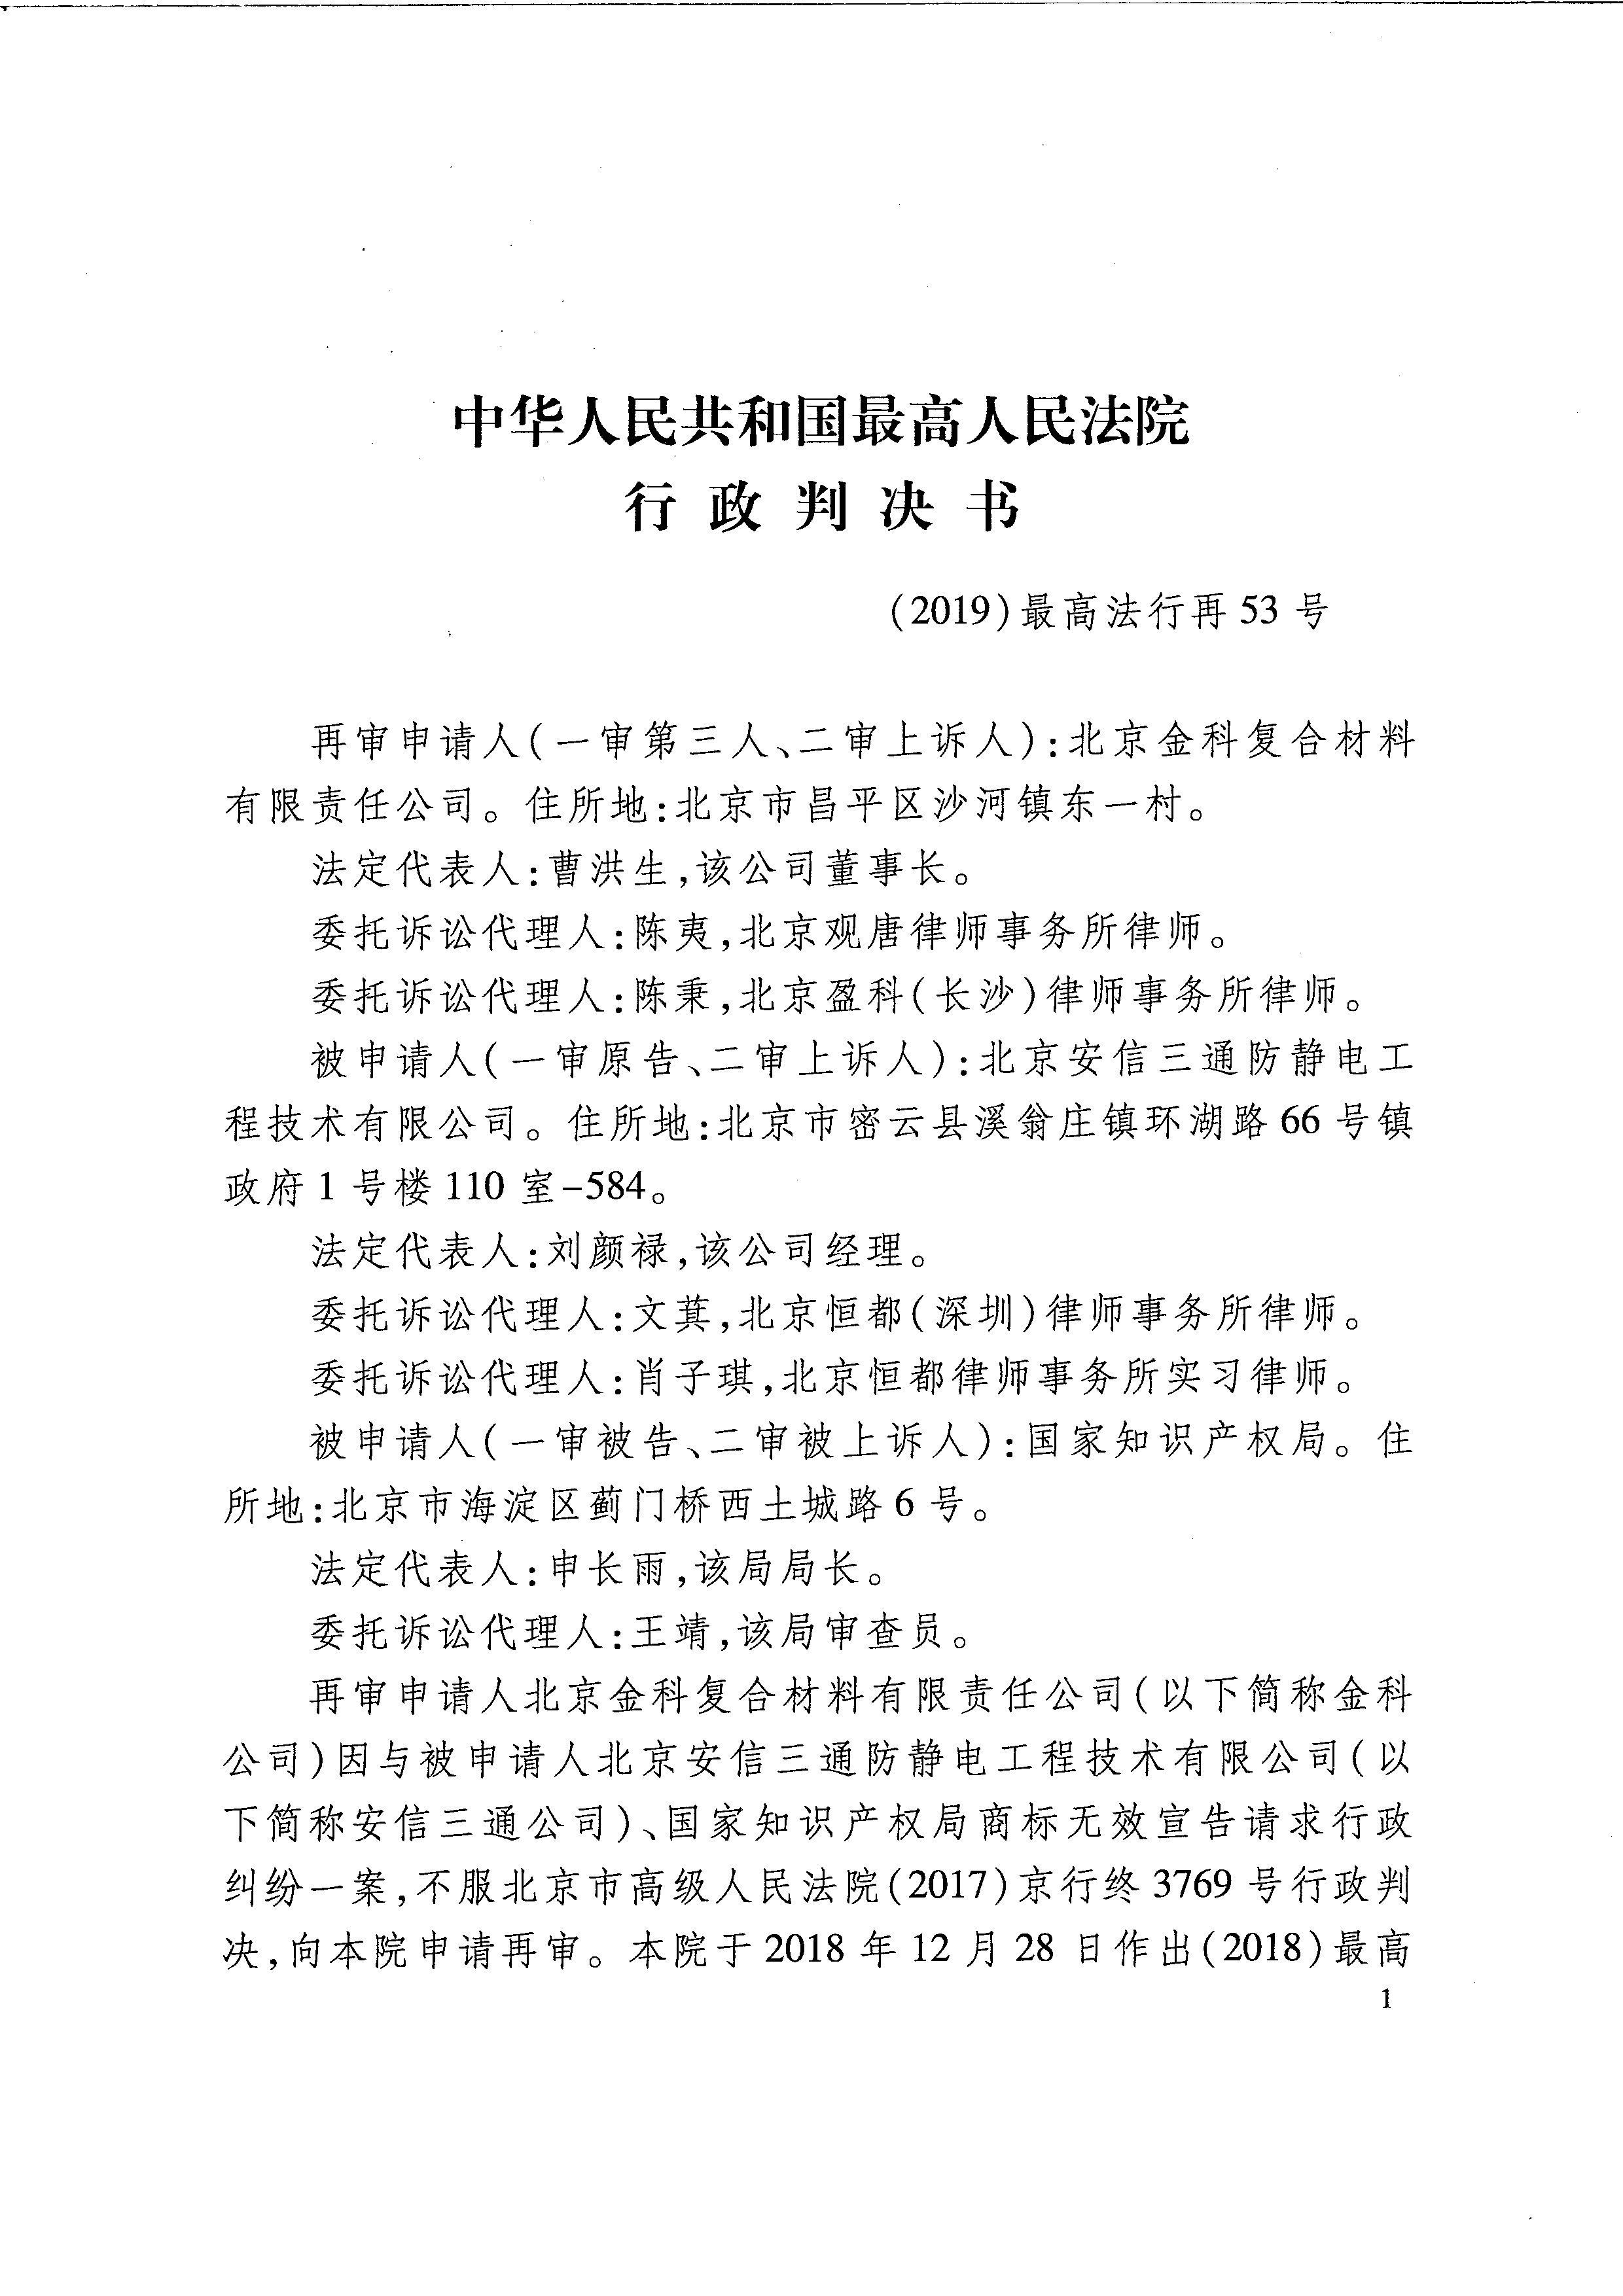 再审行政判决书(1)_Page_01.png